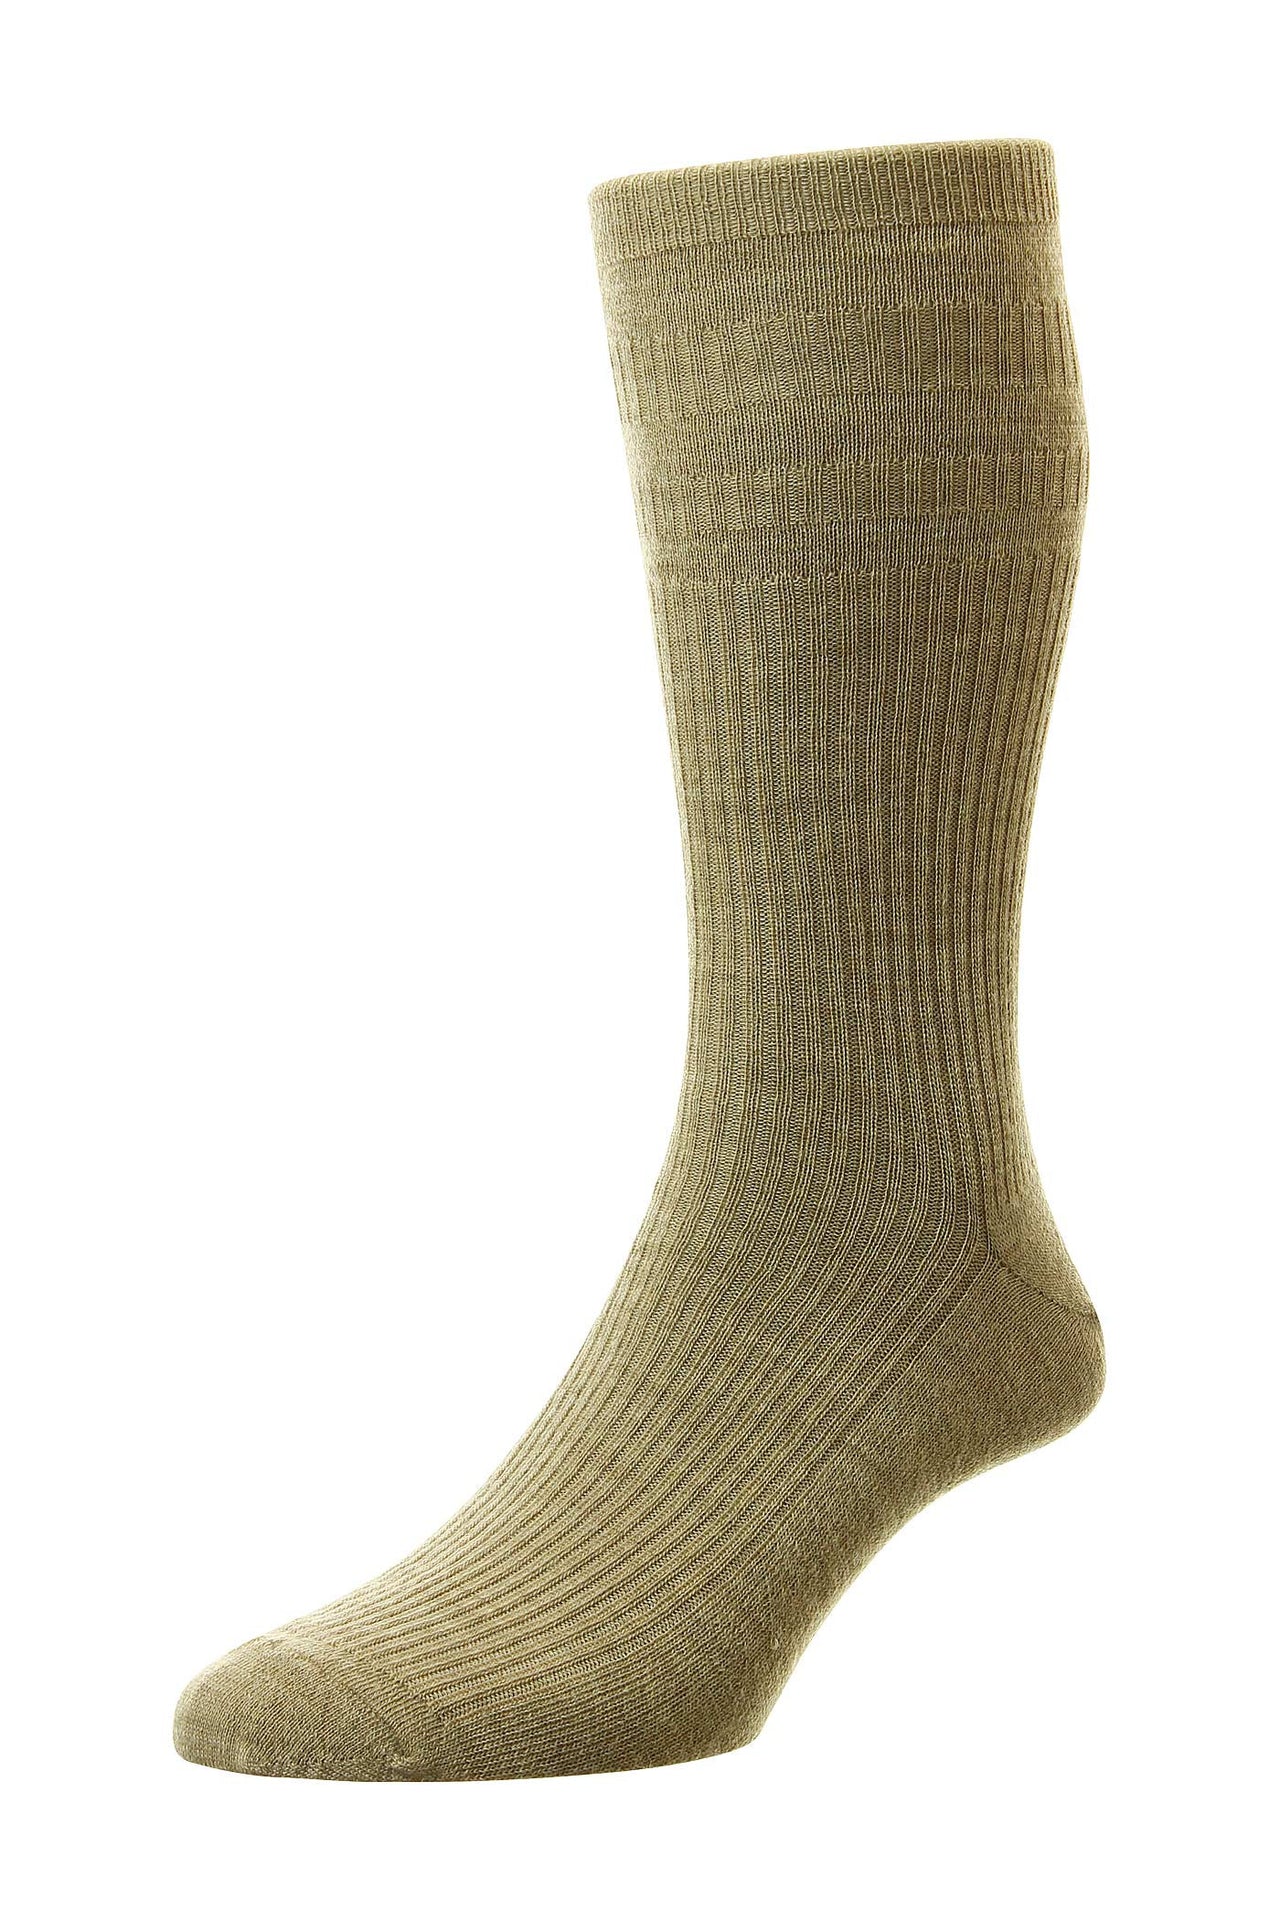 HJ Hall Original Wool Softop Socks - Taupe